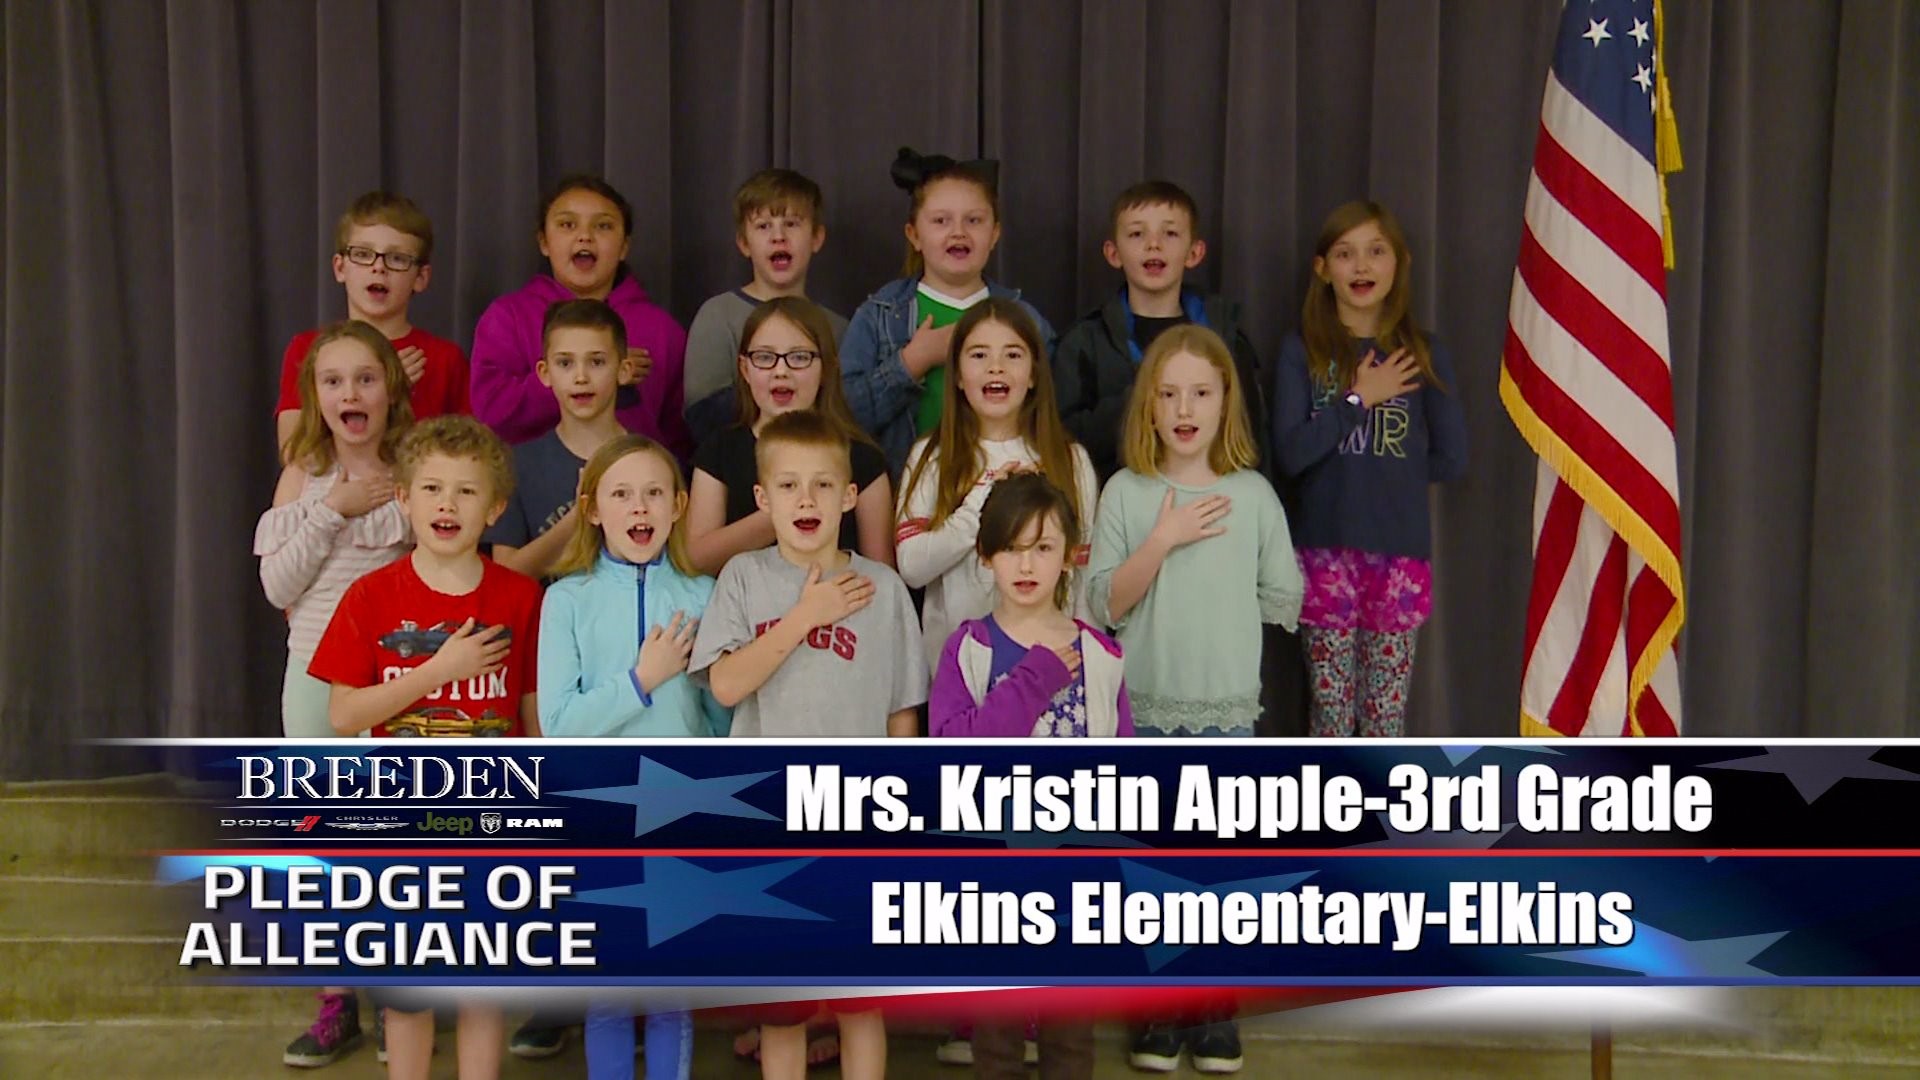 Mrs. Kristin Apple  3rd Grade Elkins Elementary, Elkins